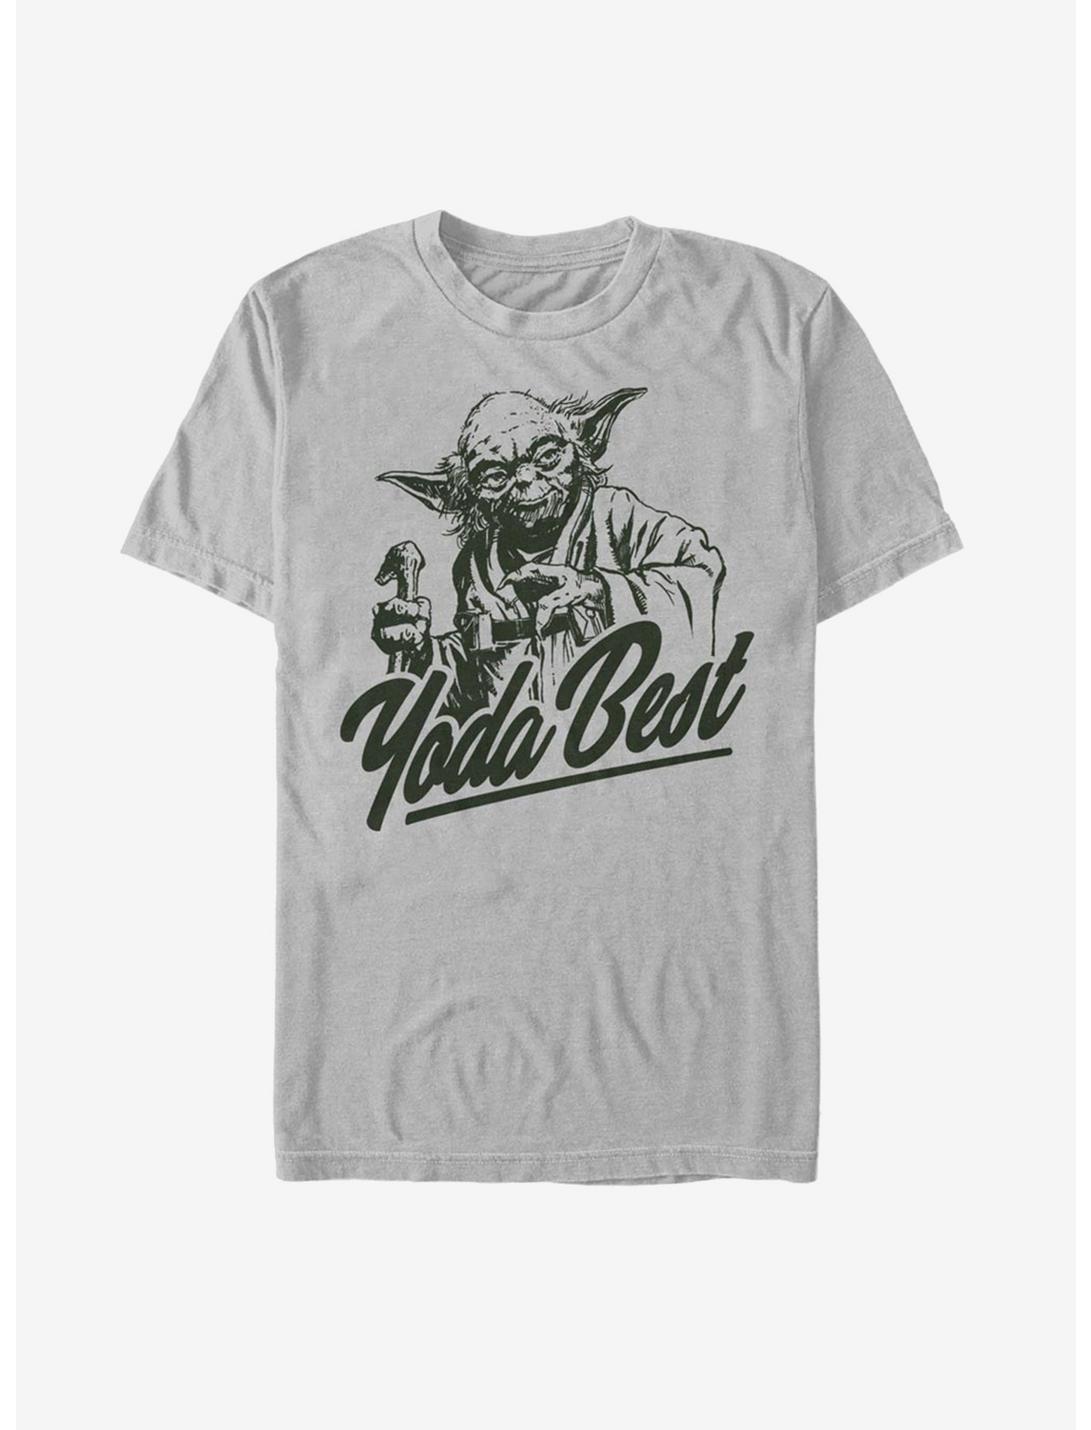 Star Wars Best Yoda T-Shirt, SILVER, hi-res